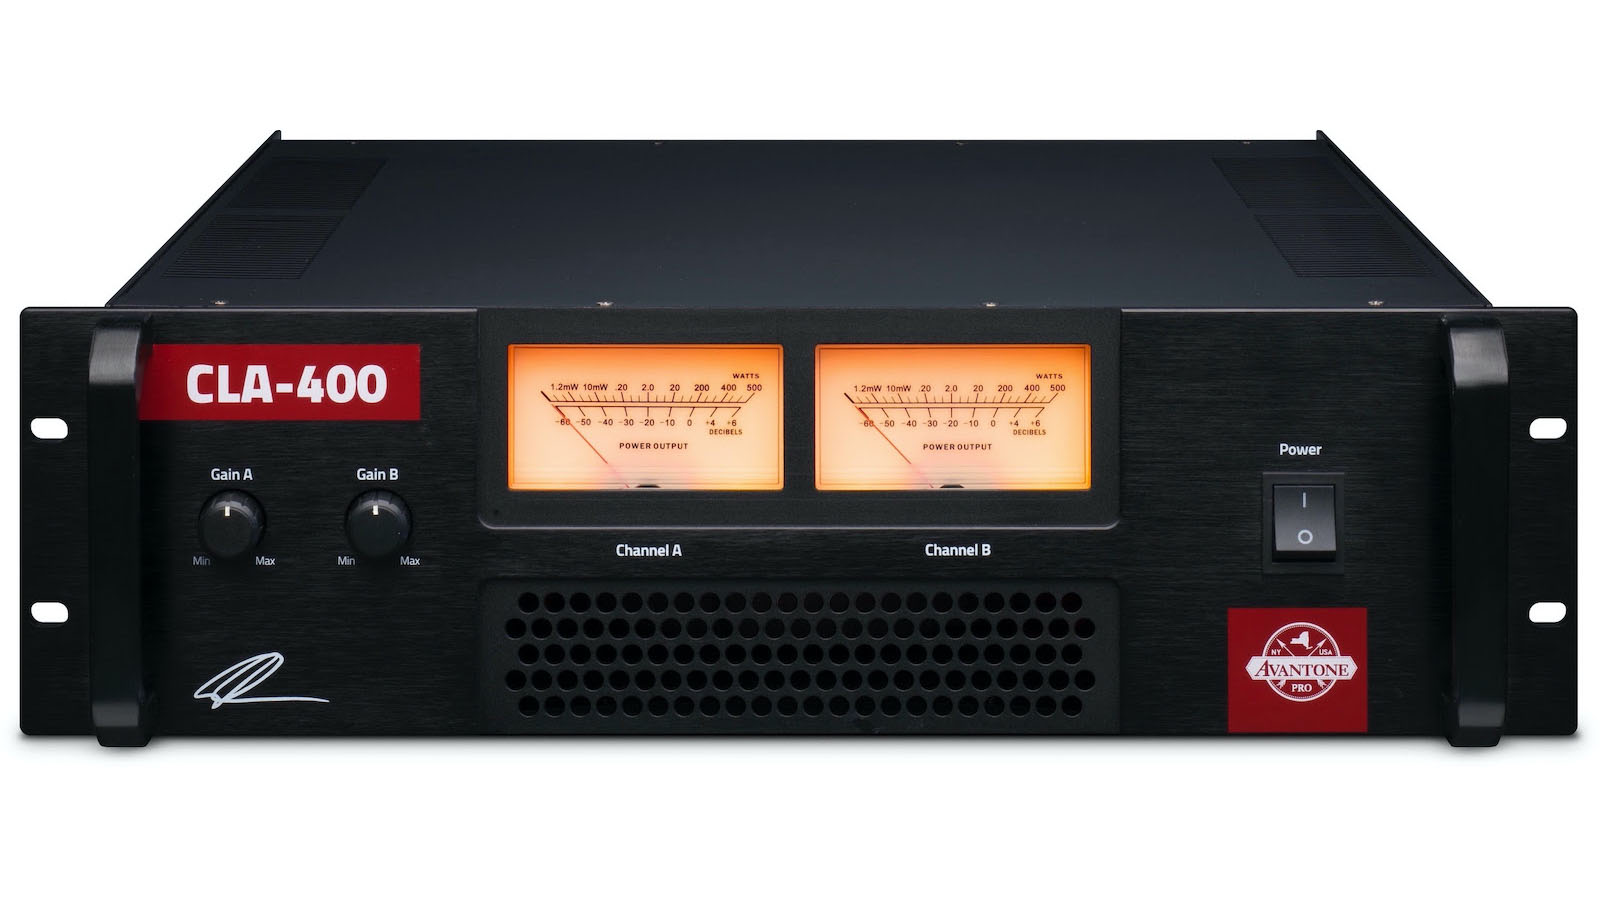 Avantone Pro CLA-400 Studio Reference Amplifier Unveiled - Mixonline